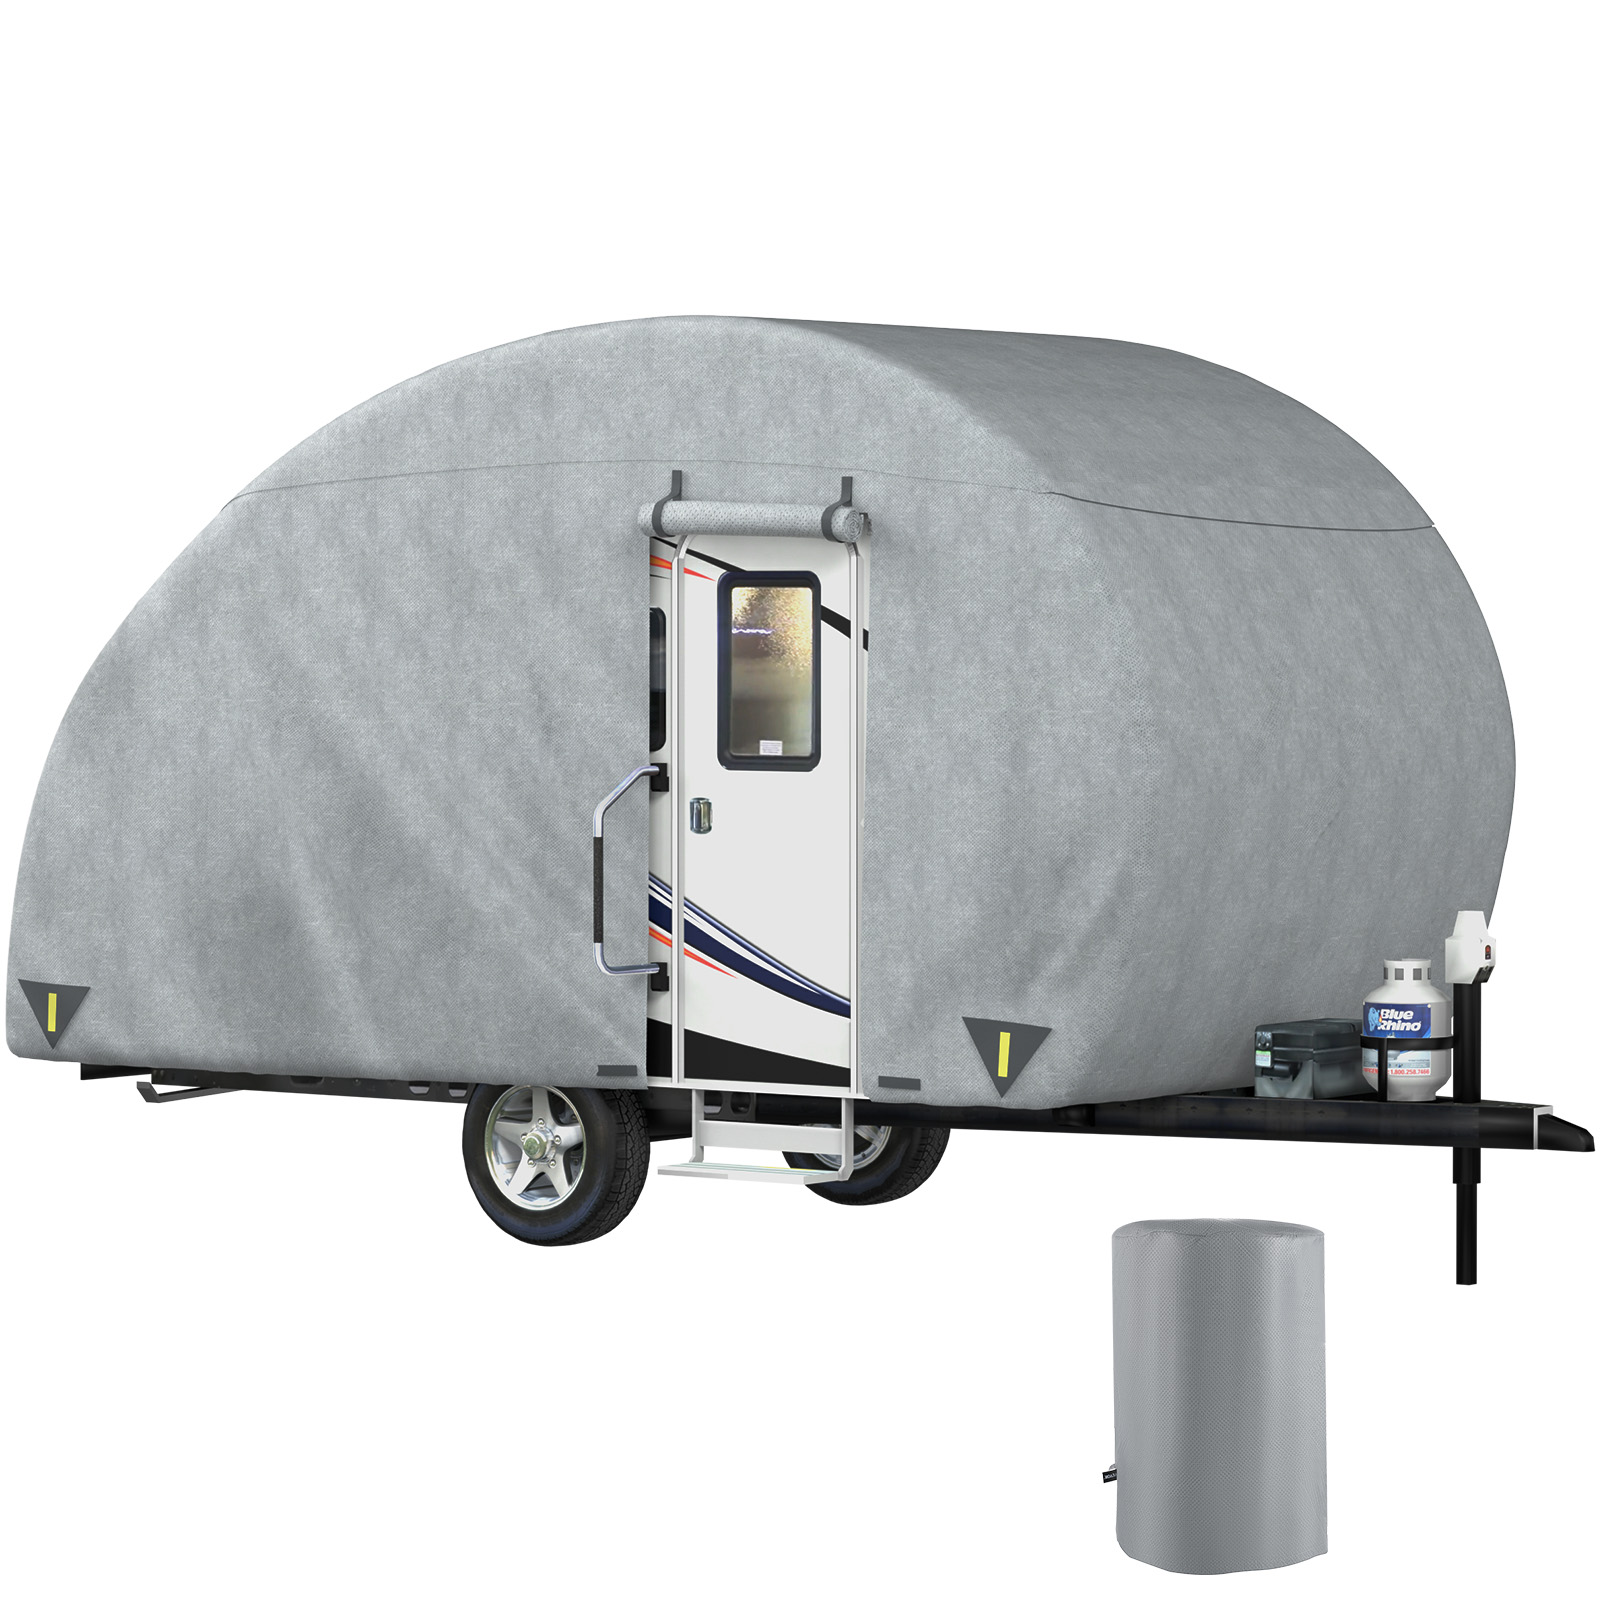 Universel attelage de remorque pour camping car van campeur